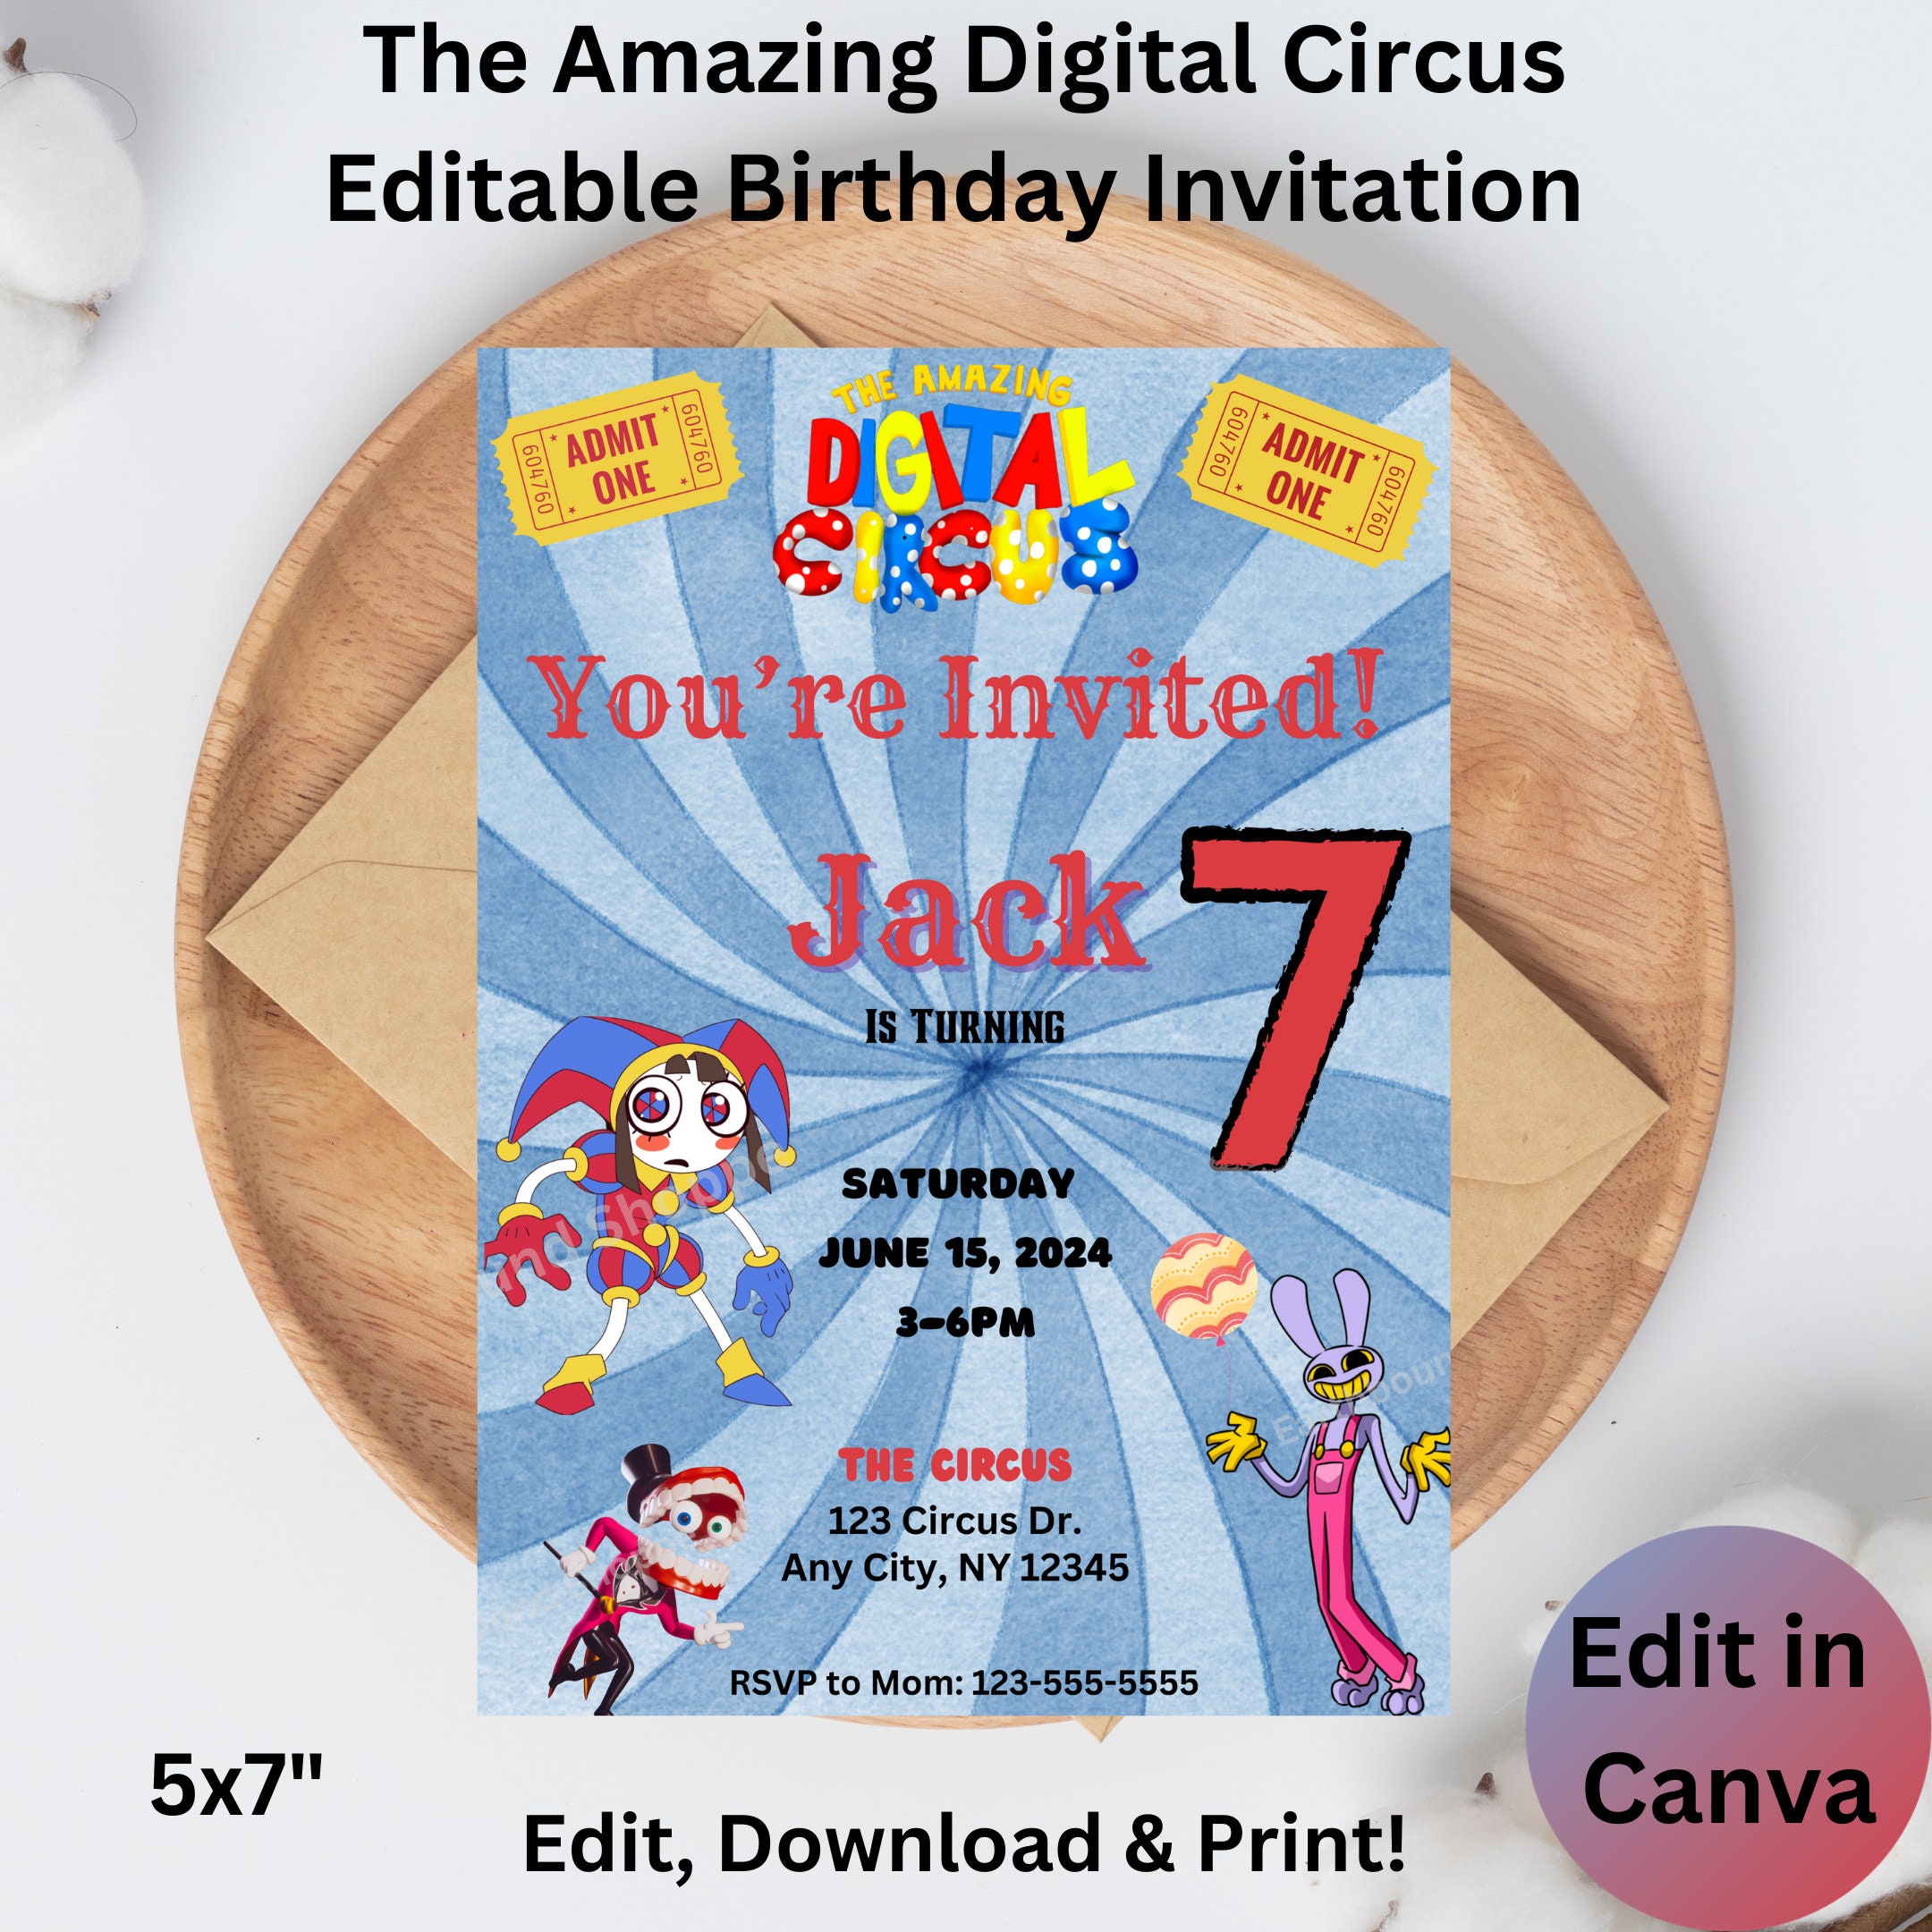 The Amazing Digital Circus Plush, 11.2 Digital Circus Plush Toys, Pomni  And Jax Stuffed Animal Plus